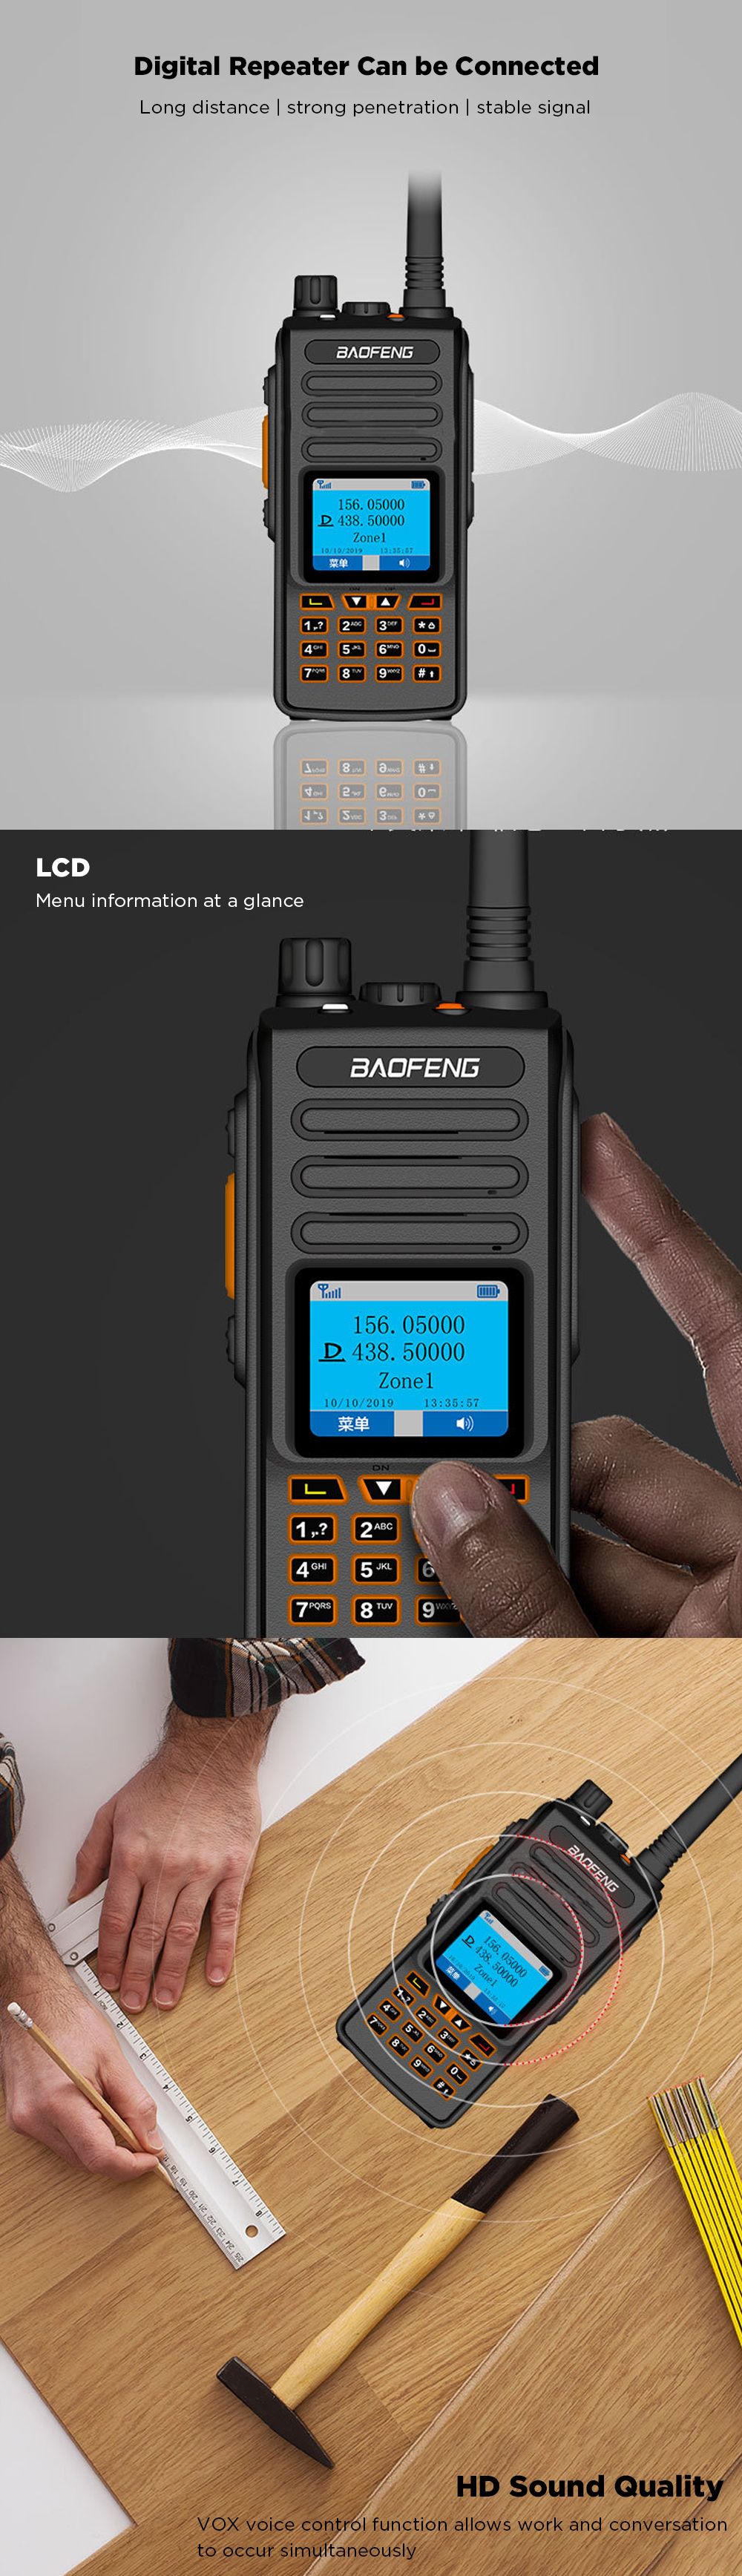 BAOFENG-DM-S8-plus-10W-5500mAh-Two-way-Handheld-Radio-Walkie-Talkie-128-Channels-403-470Mhz-Intercom-1696251